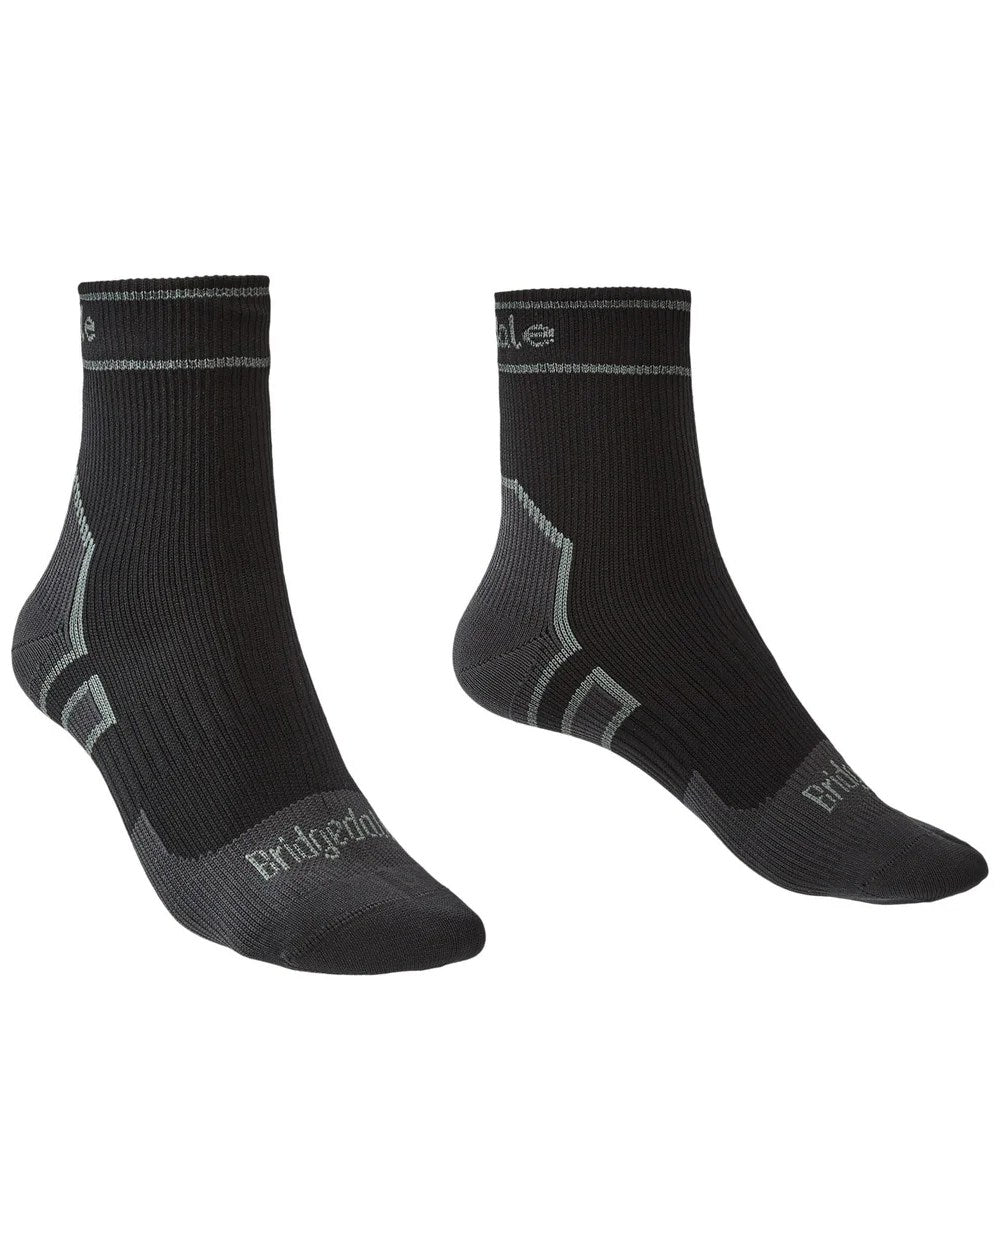 Black Coloured Bridgedale StormSock Lightweight Ankle Socks On A White Background 